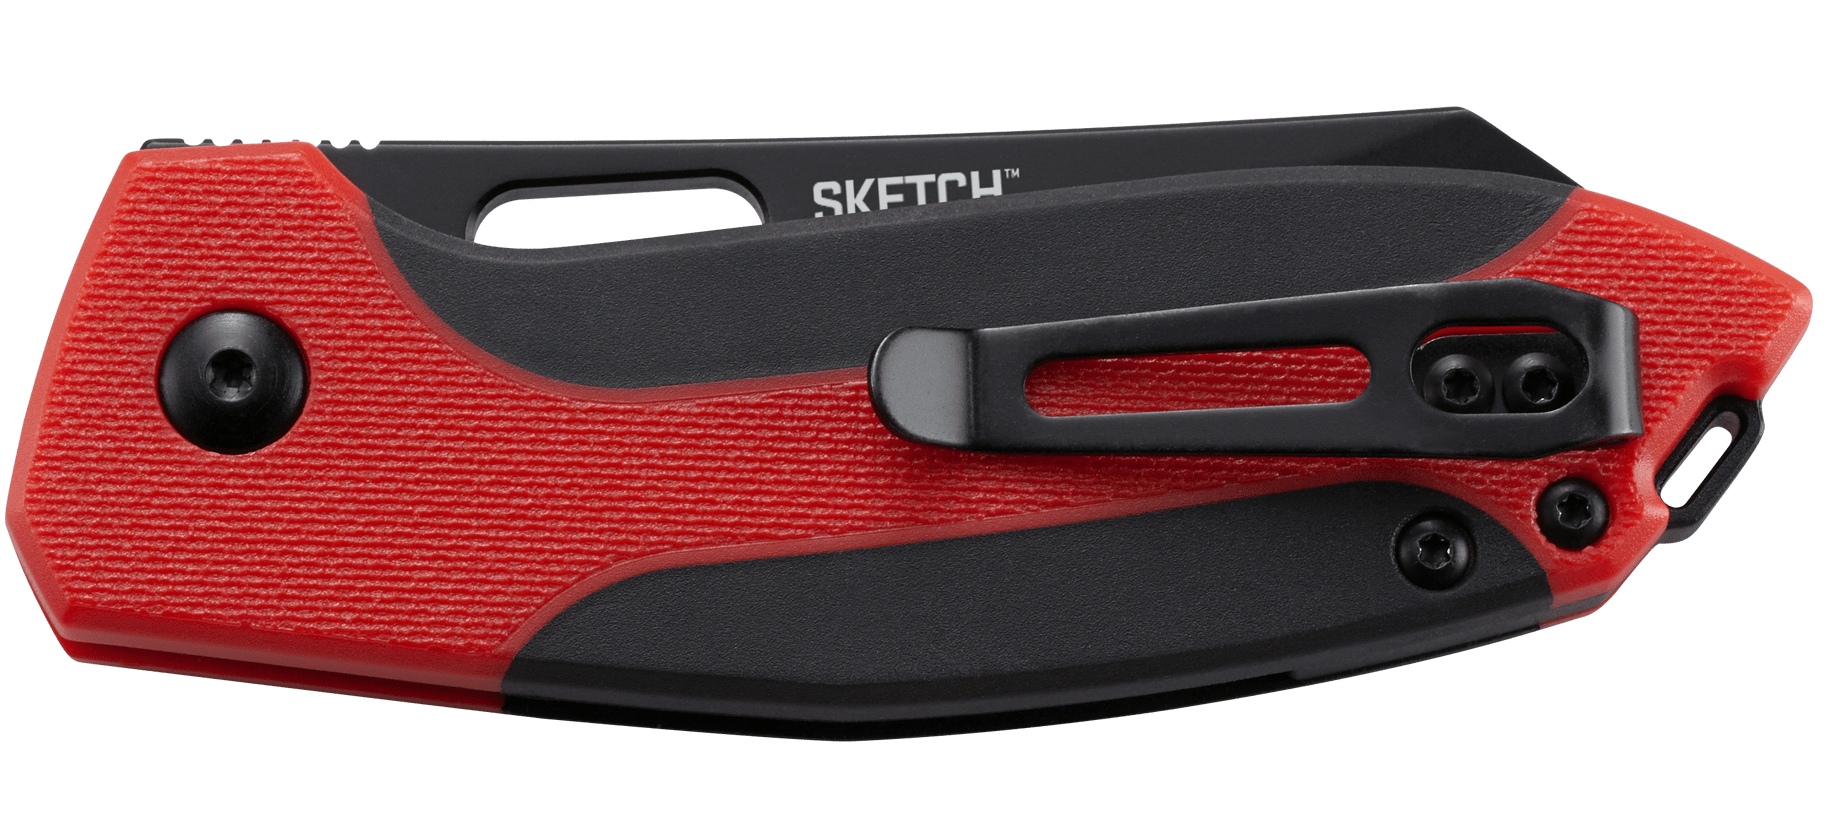 Складной нож CRKT Sketch™ Red, сталь 8Cr13MoV, рукоять ABS пластик - фото 5